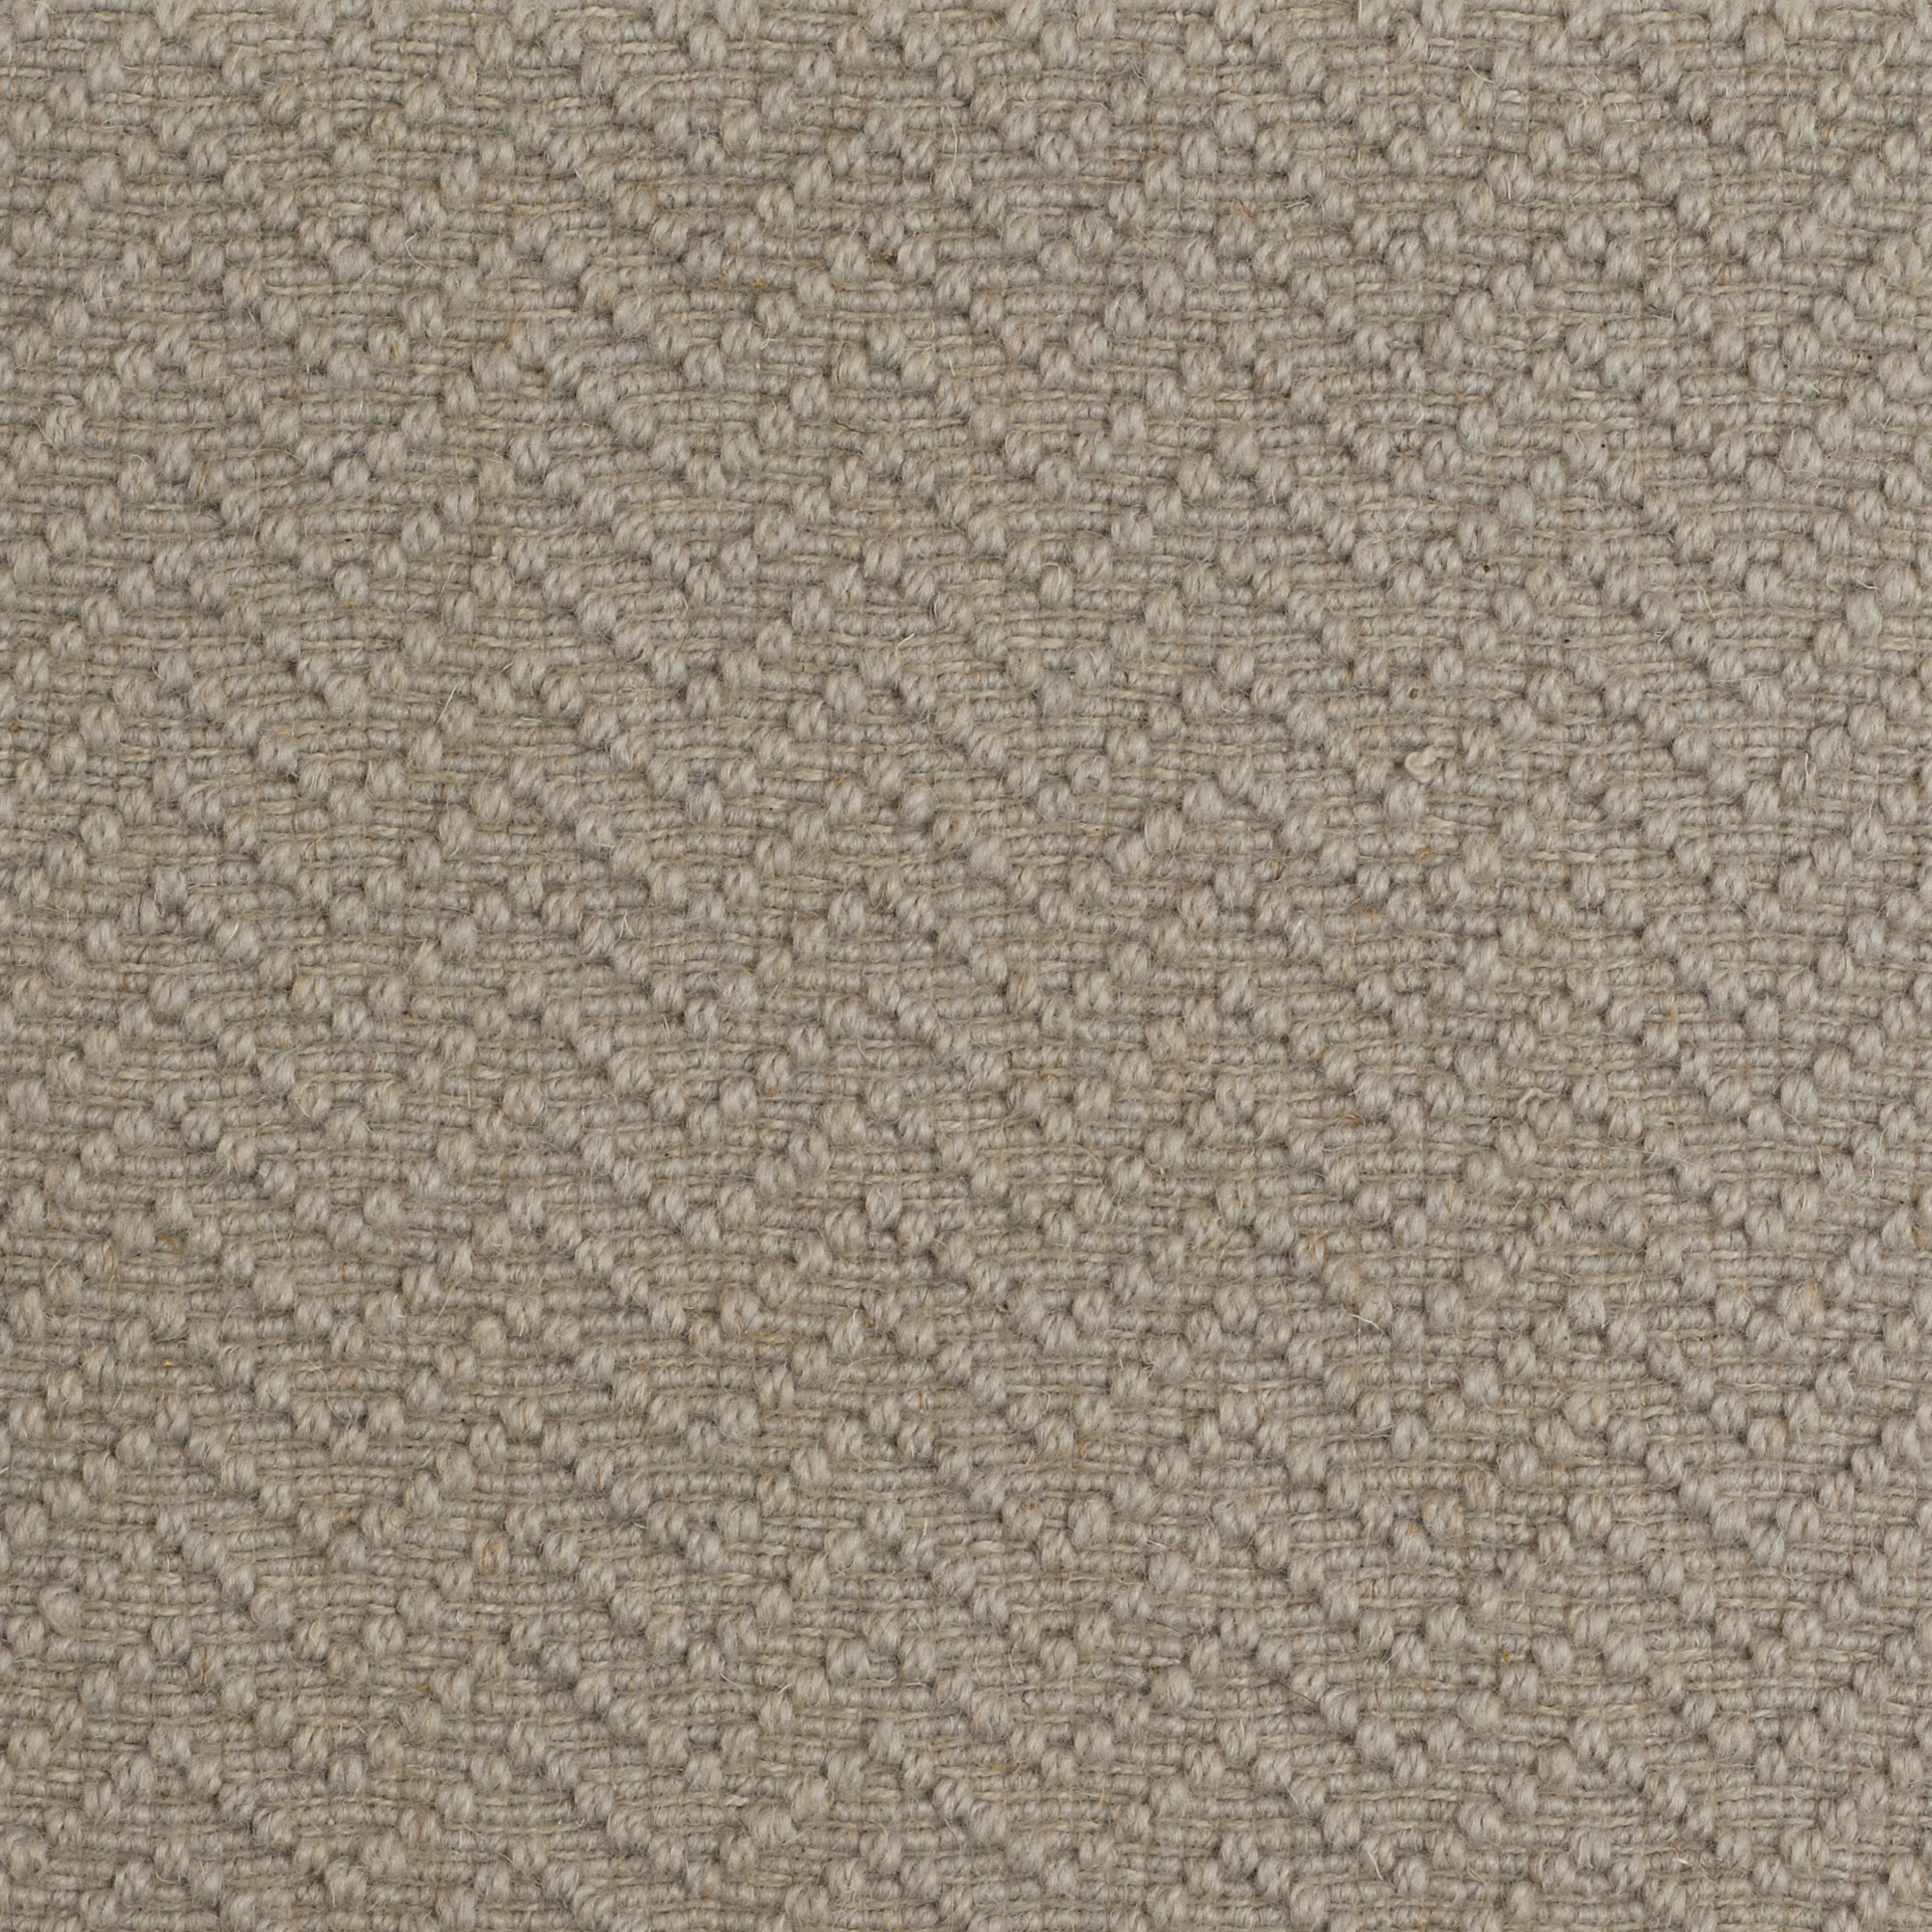 Royalty: Moon Stone - 100% New Zealand Wool Carpet